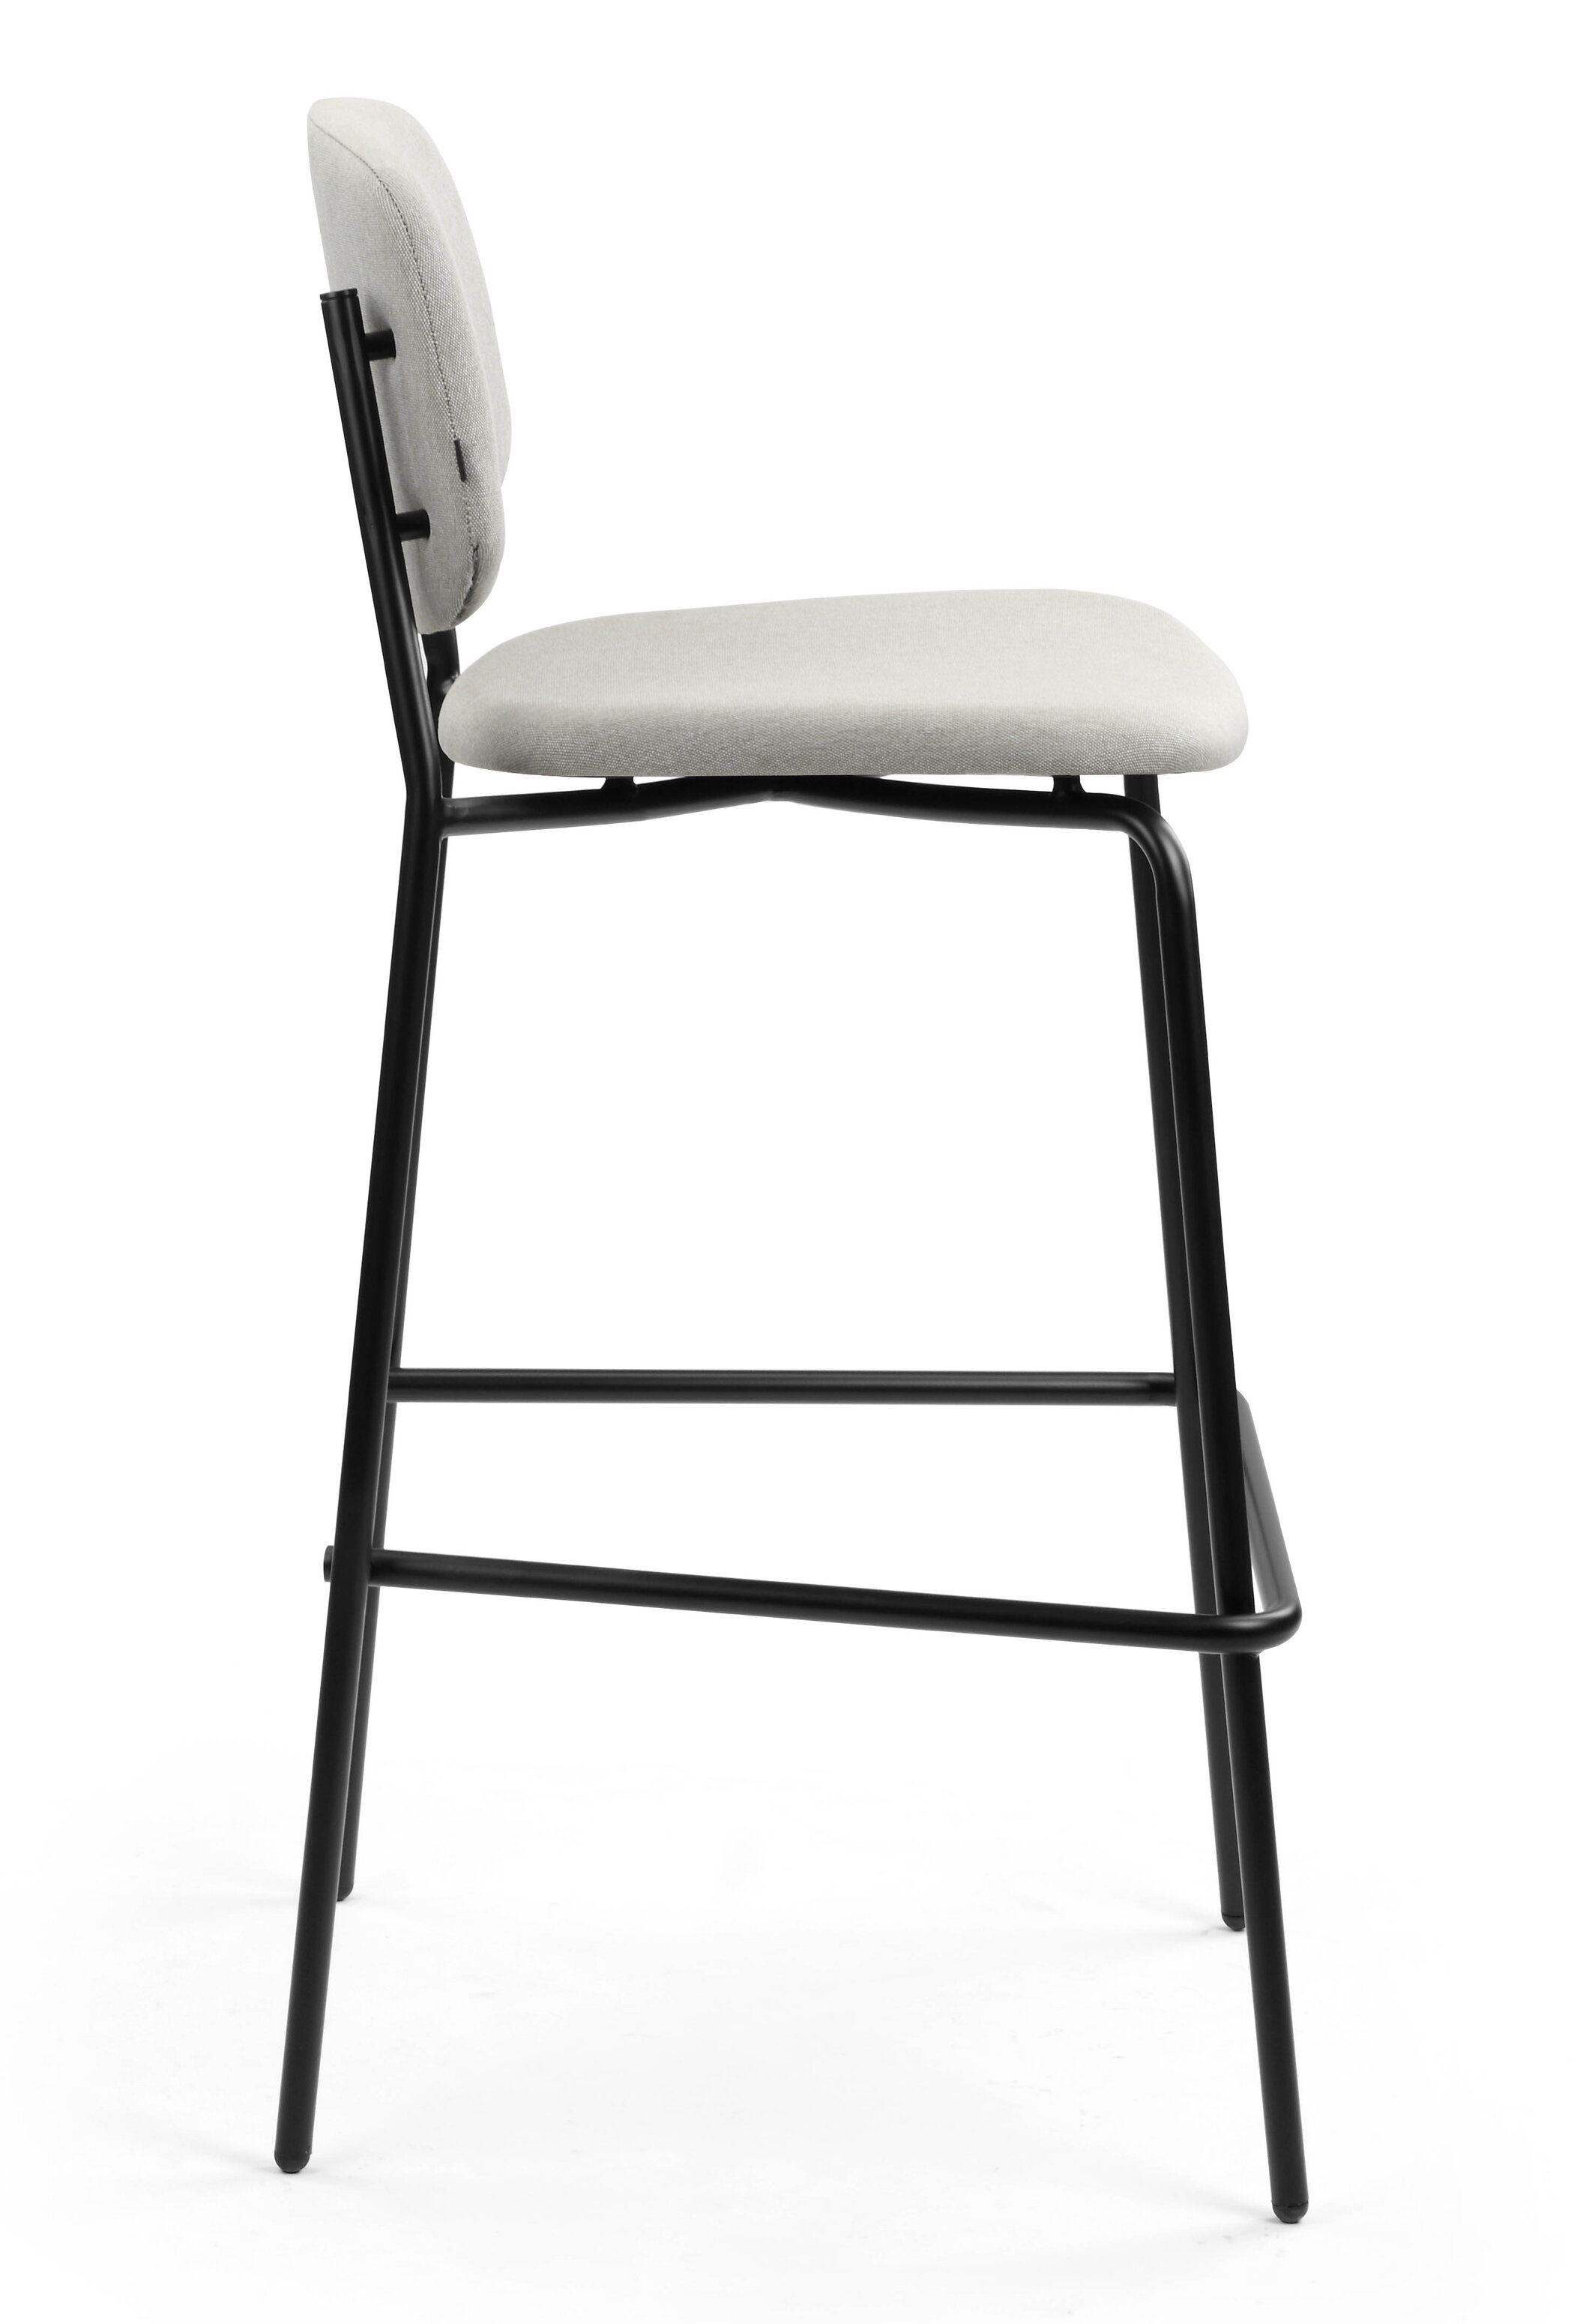 WS - Platform high stool - UPH Grey (Side)